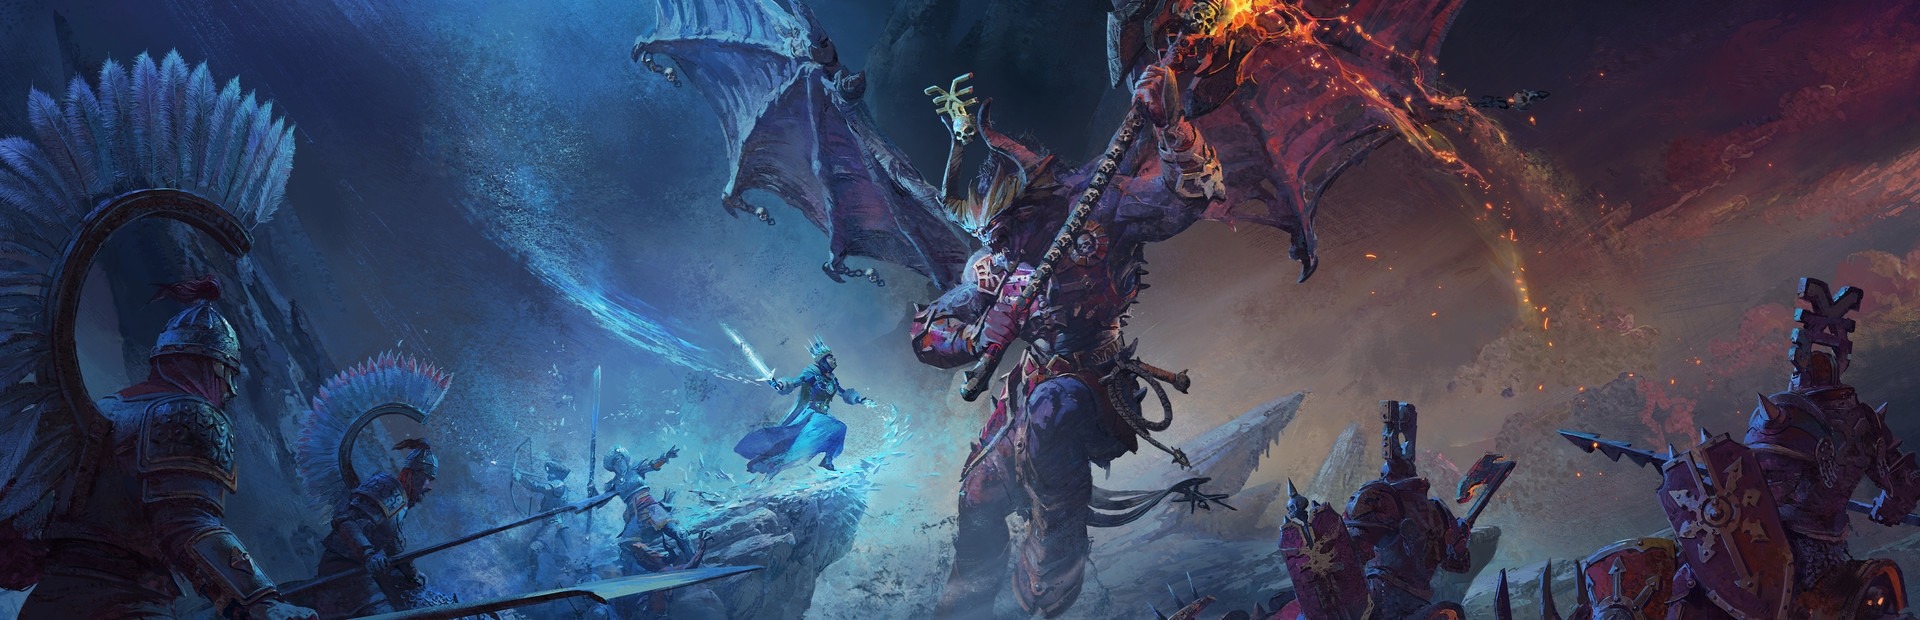 Banner Total War: Warhammer III - Champions of Chaos